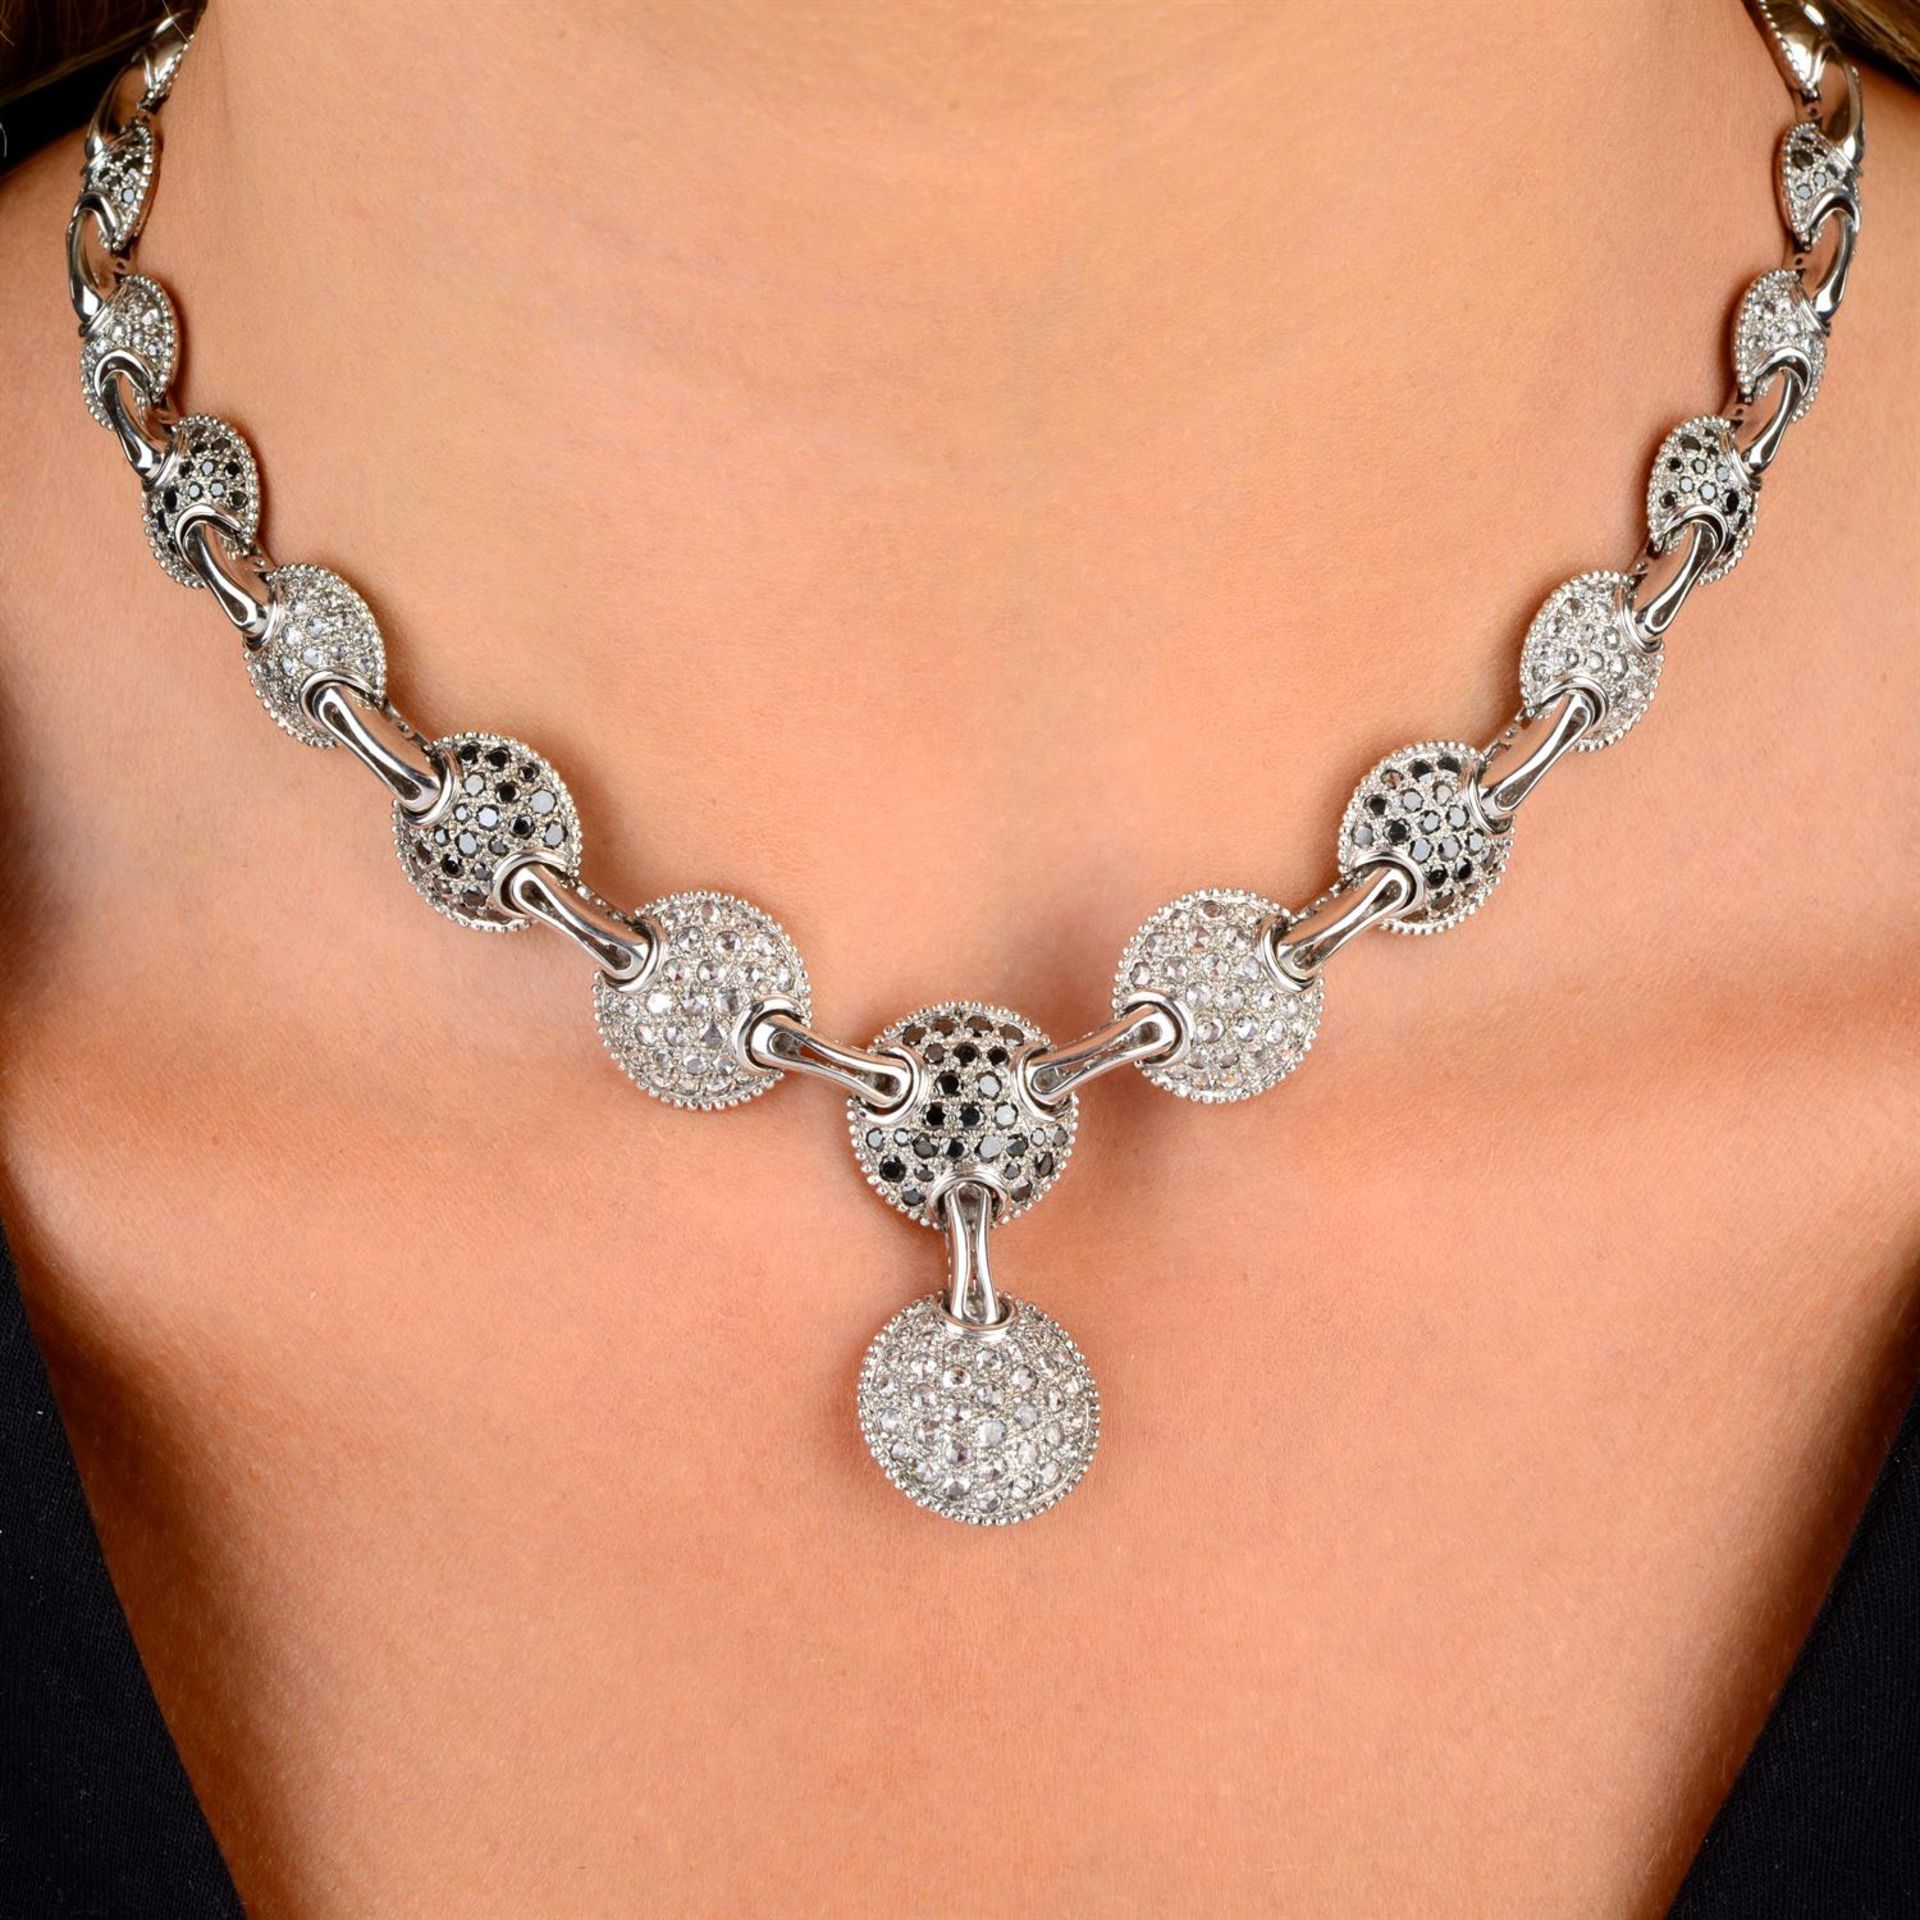 Diamond & gem necklace, by Mouawad